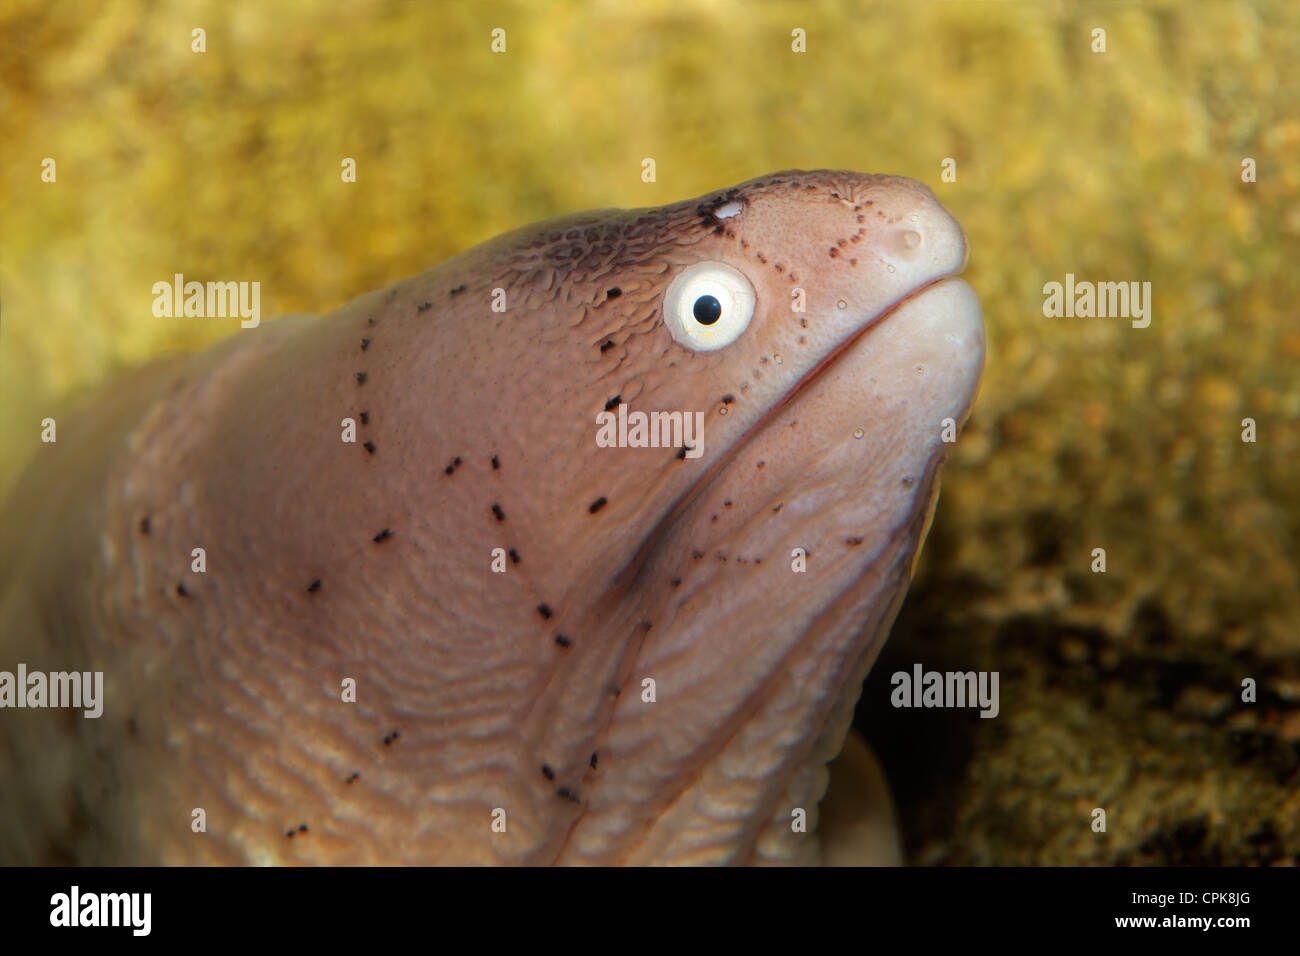 Portrait of a geometric moray eel (Gymnothorax griseus) Stock Photo